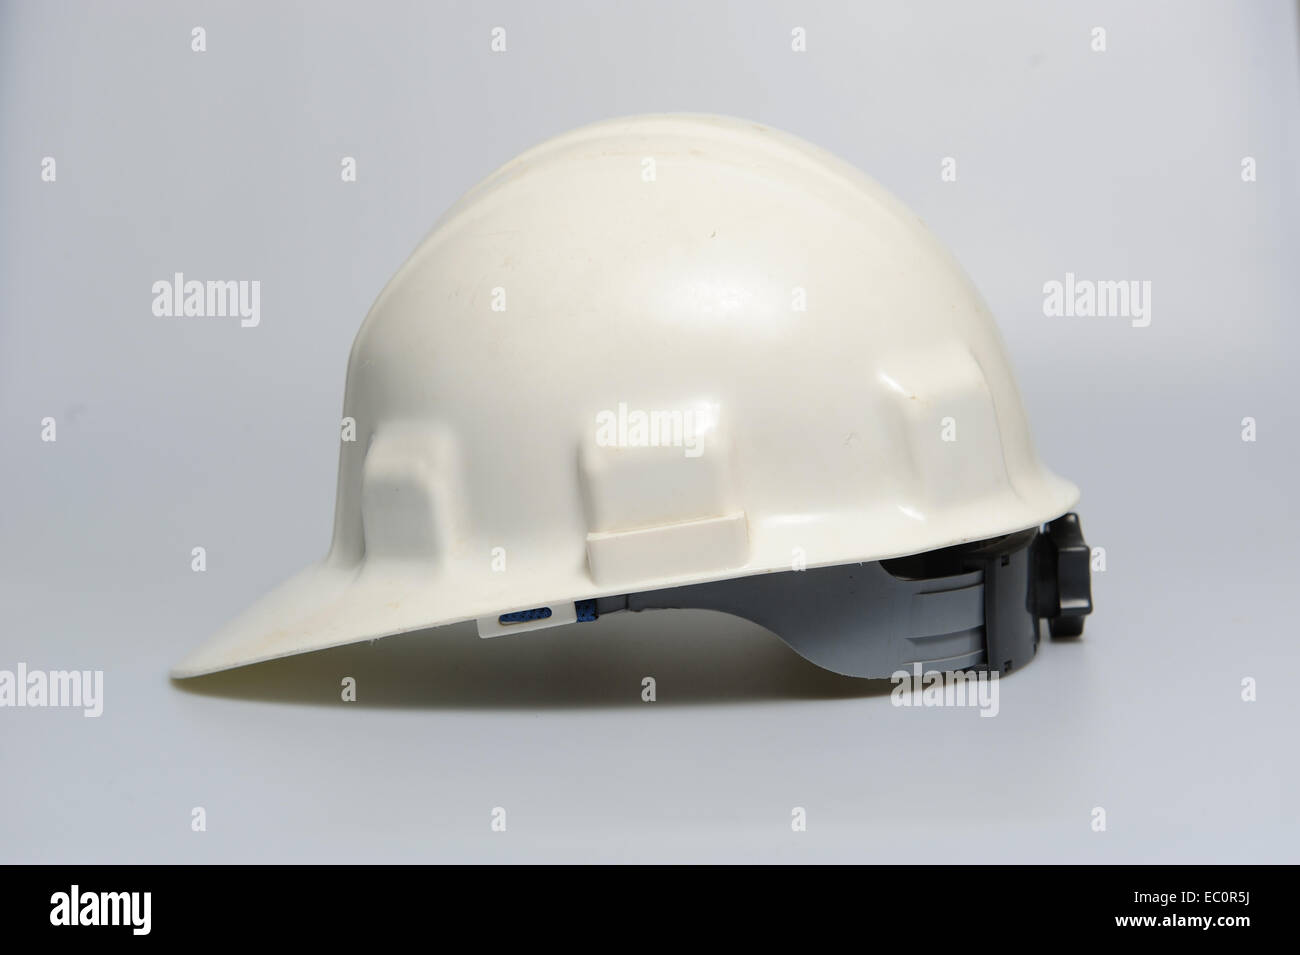 White hard hat helmet on white background  Plastic construction head cover Stock Photo